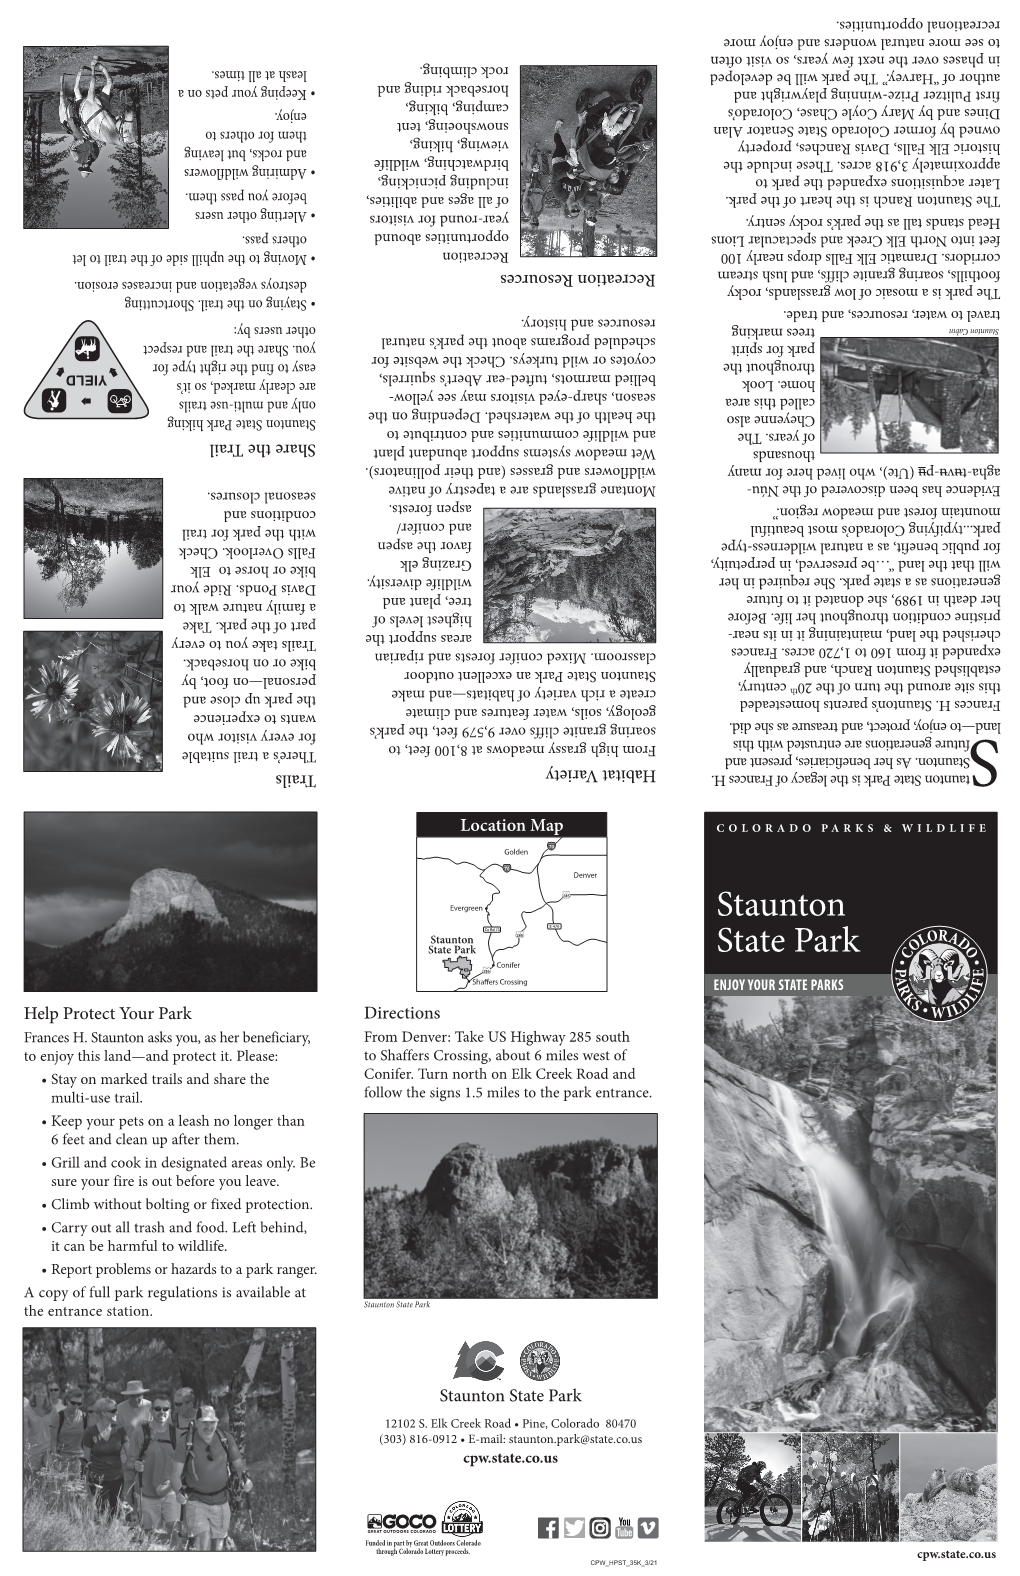 Staunton State Park Brochure